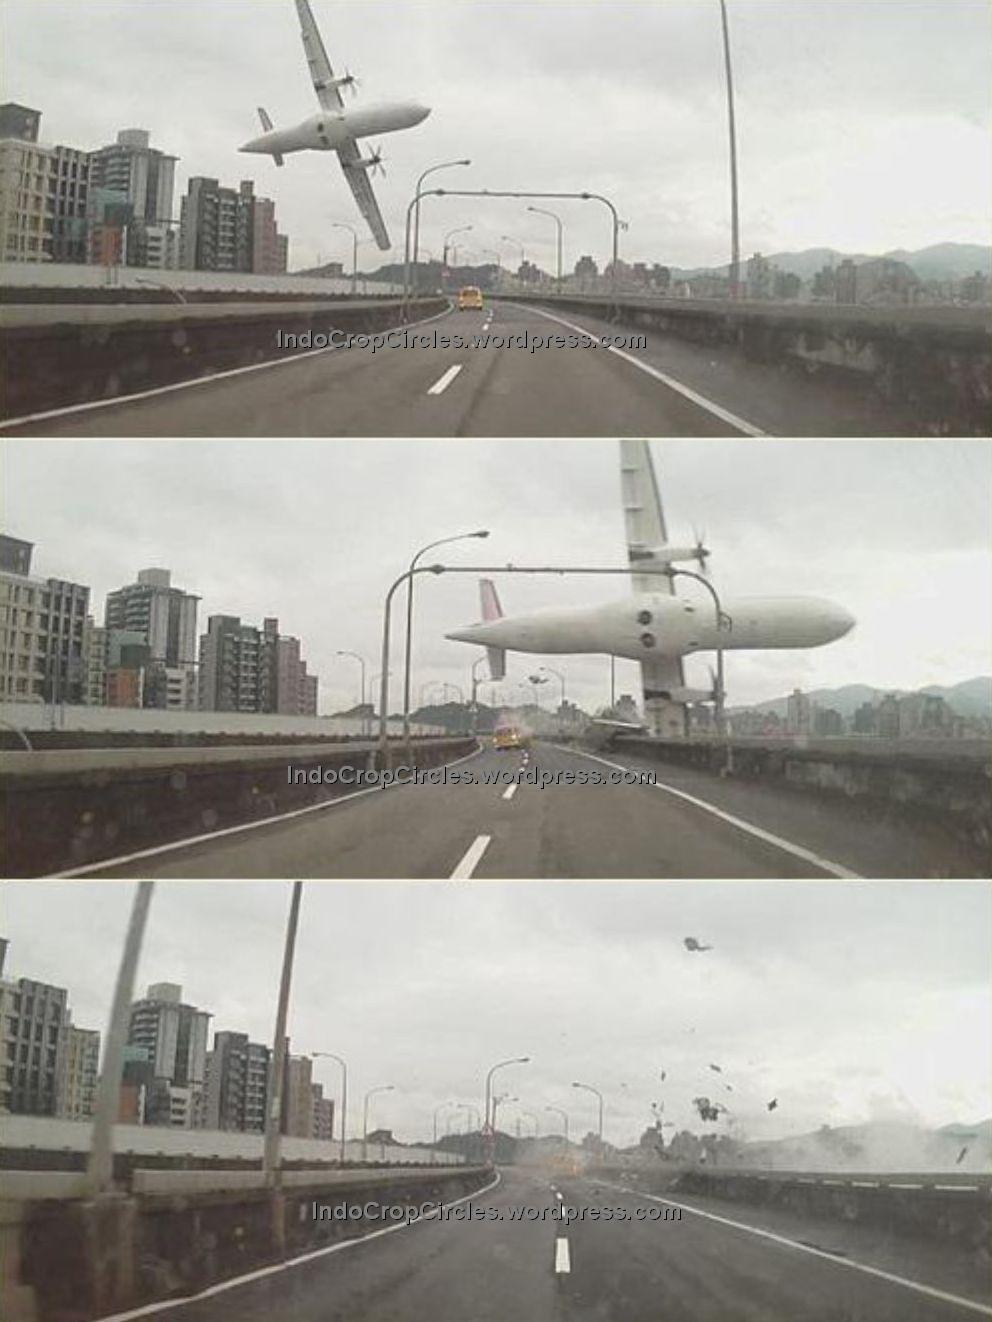 foto--video-terekam-kamera-pesawat-transasia-airways-jatuh-di-taiwan